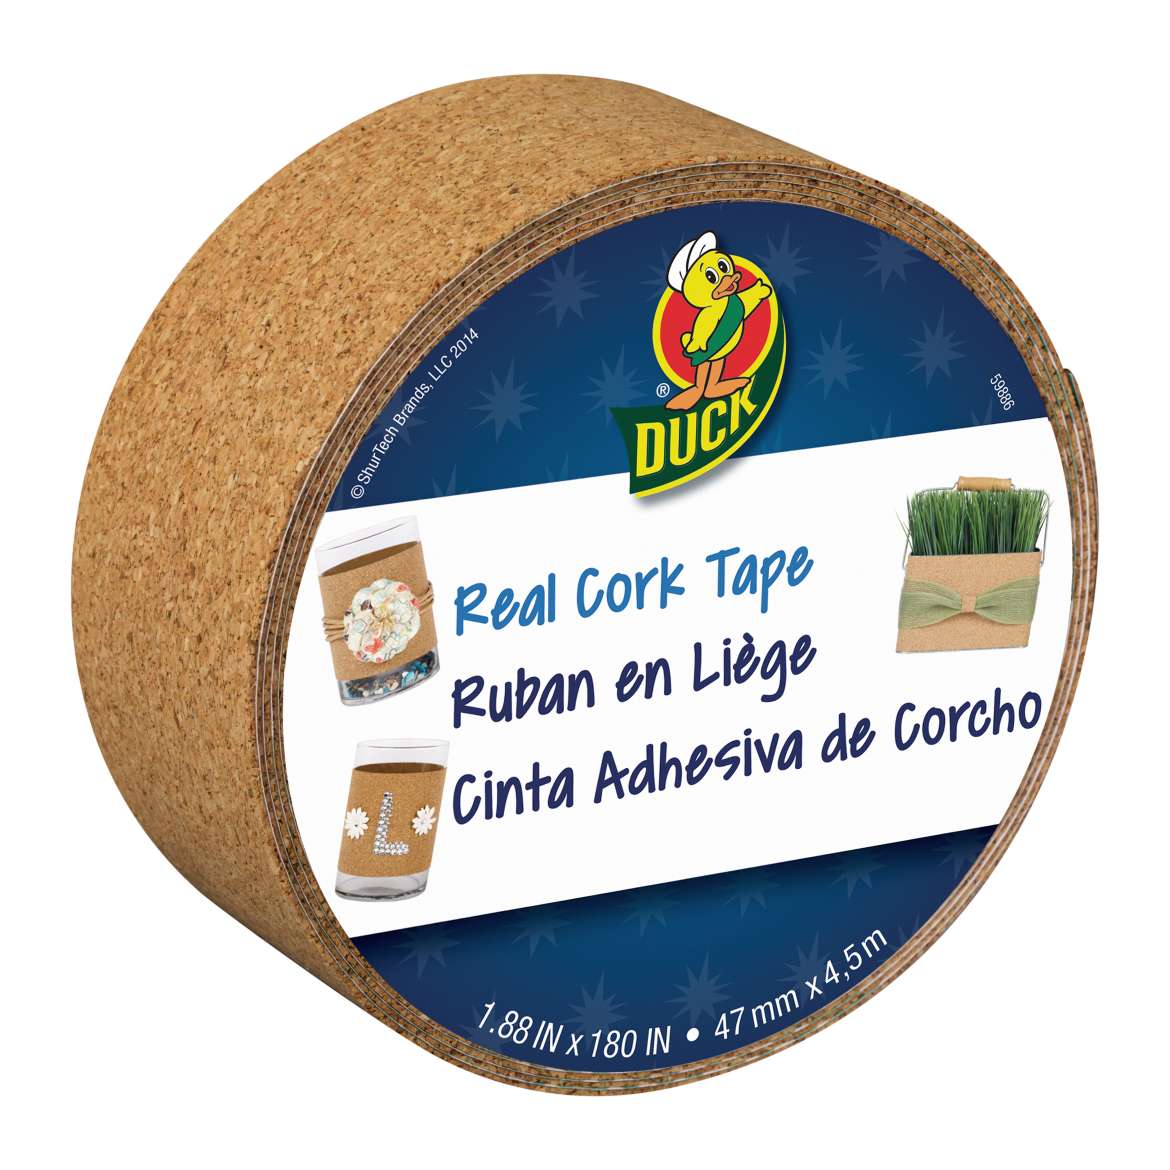 Real Cork Tape Image